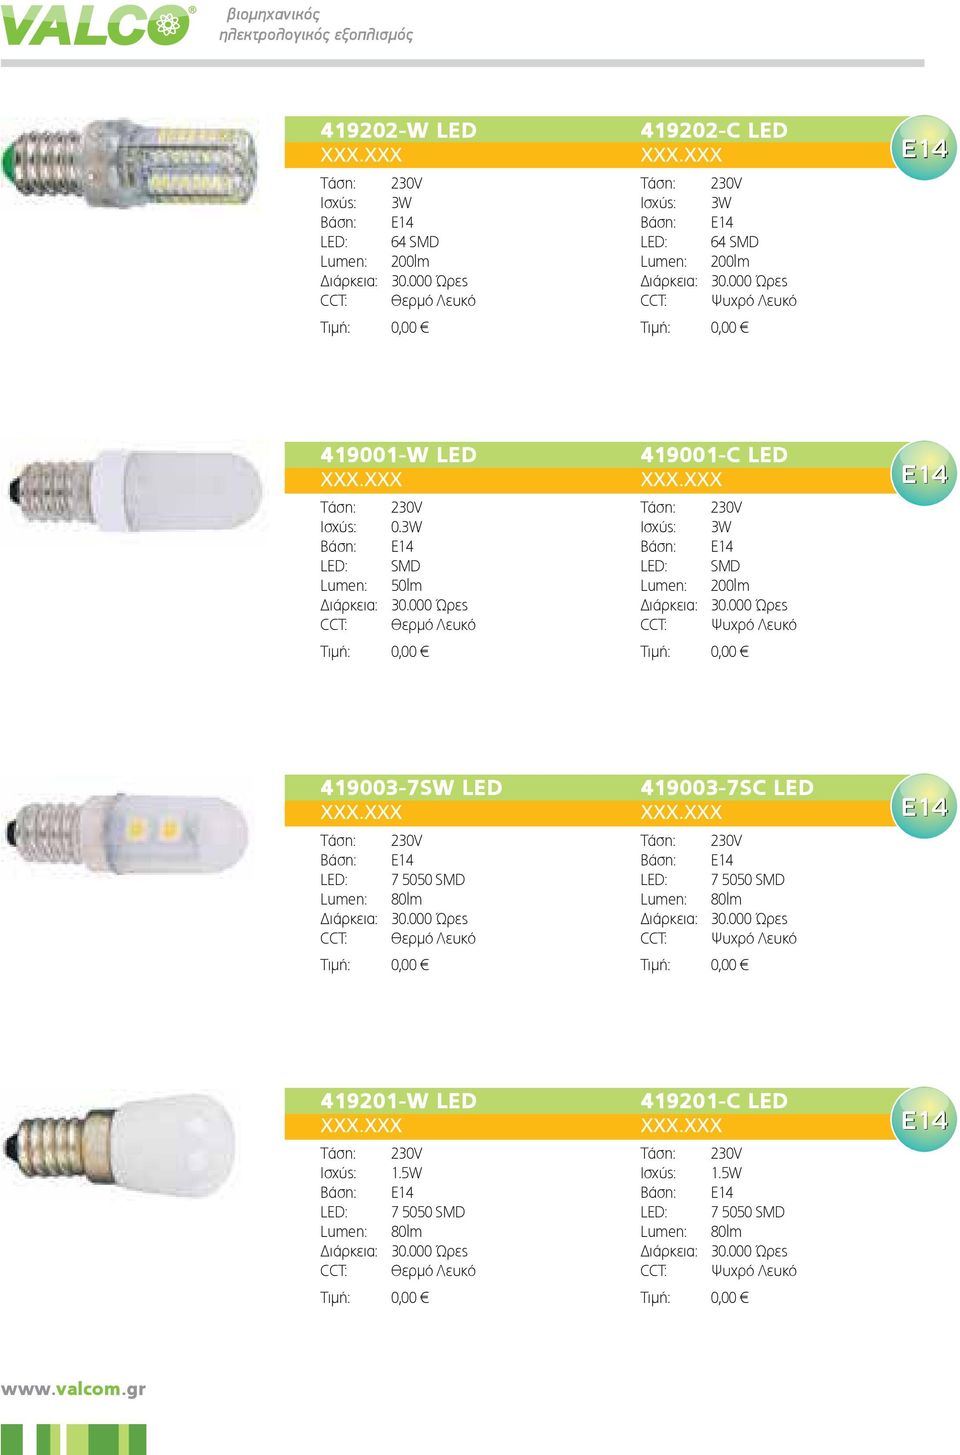 3W Βάση: E14 LED: SMD 50lm Διάρκεια: 30.000 Ώρες CCT: Θερμό Λευκό Τιμή: 0,00 419001-C LED Tάση: 230V Iσχύς: 3W Βάση: E14 LED: SMD 200lm Διάρκεια: 30.